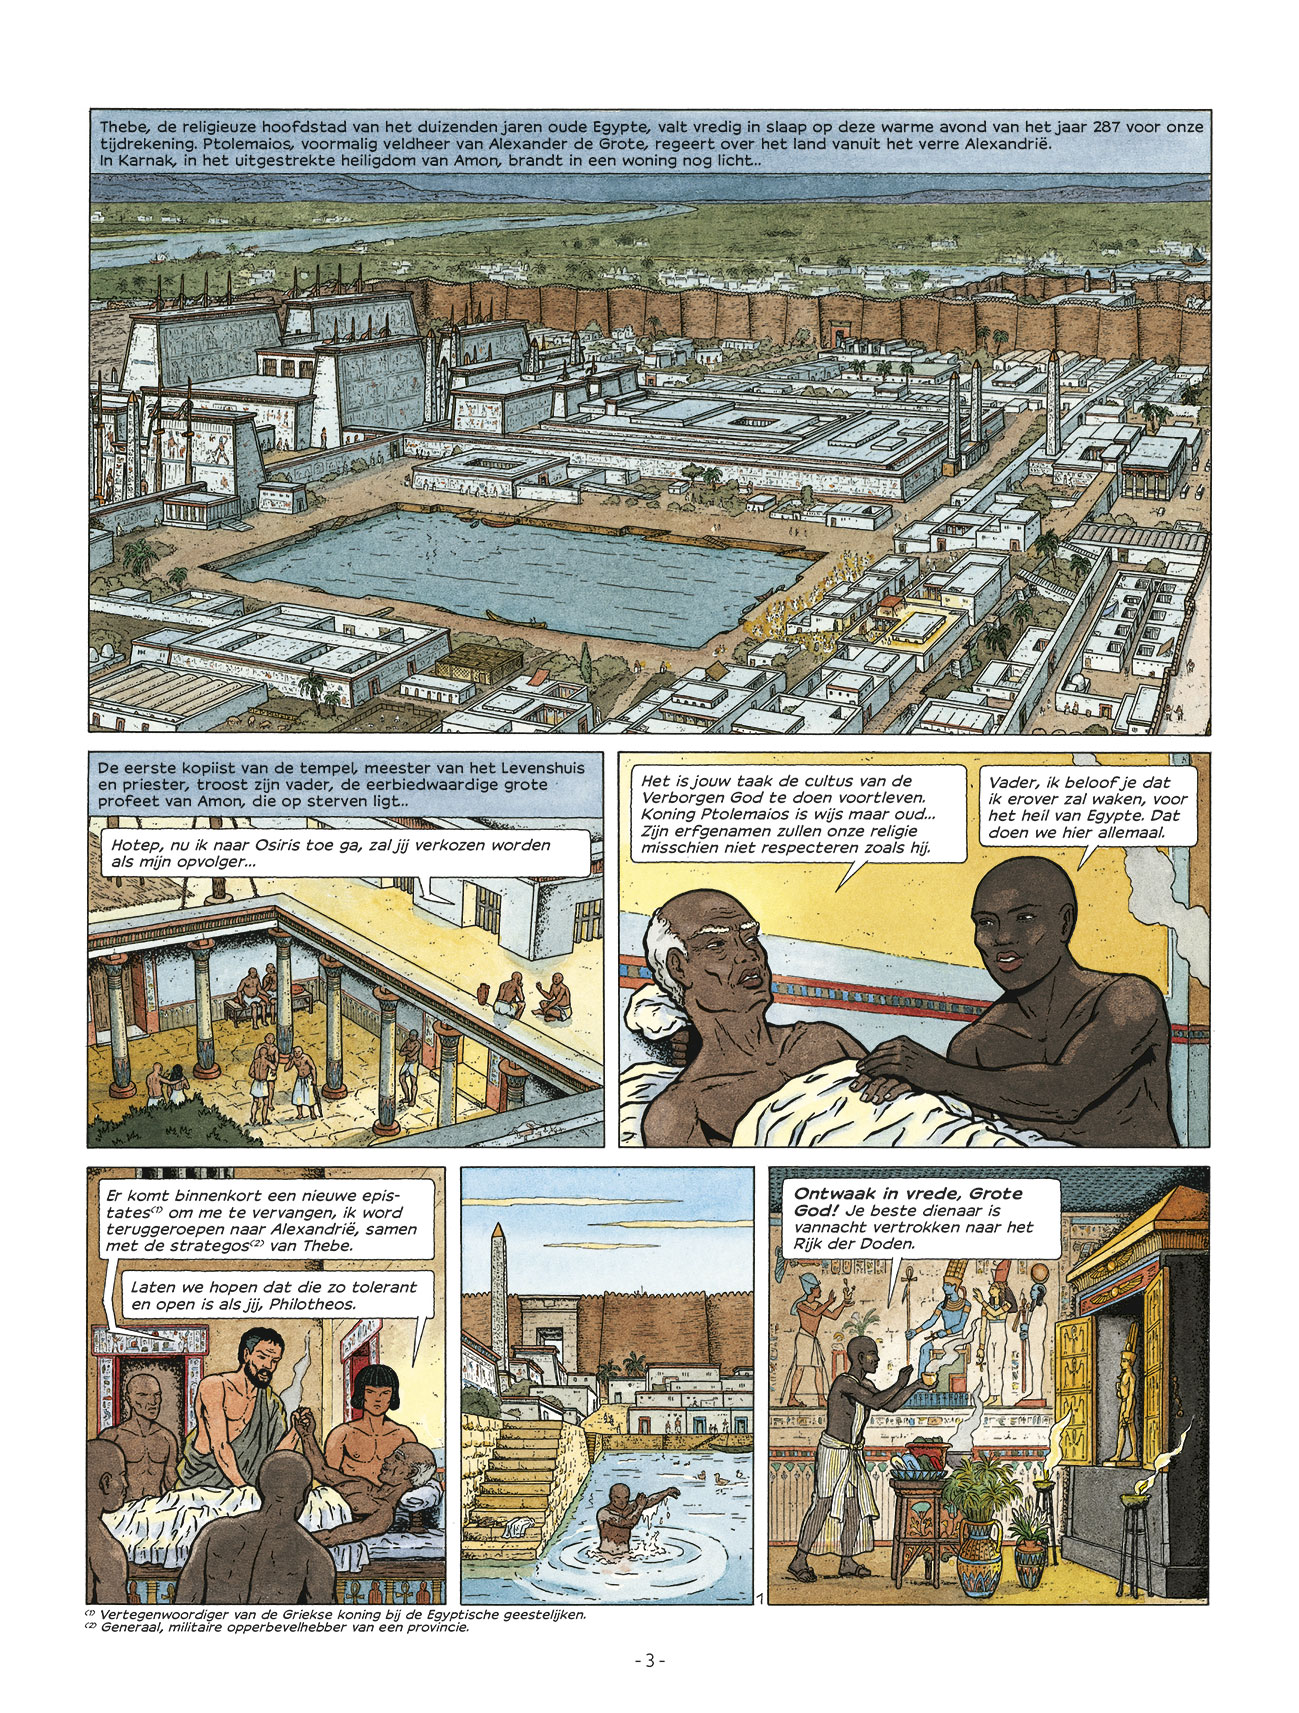 Farao's van Alexandrië - integrale editie pagina 1